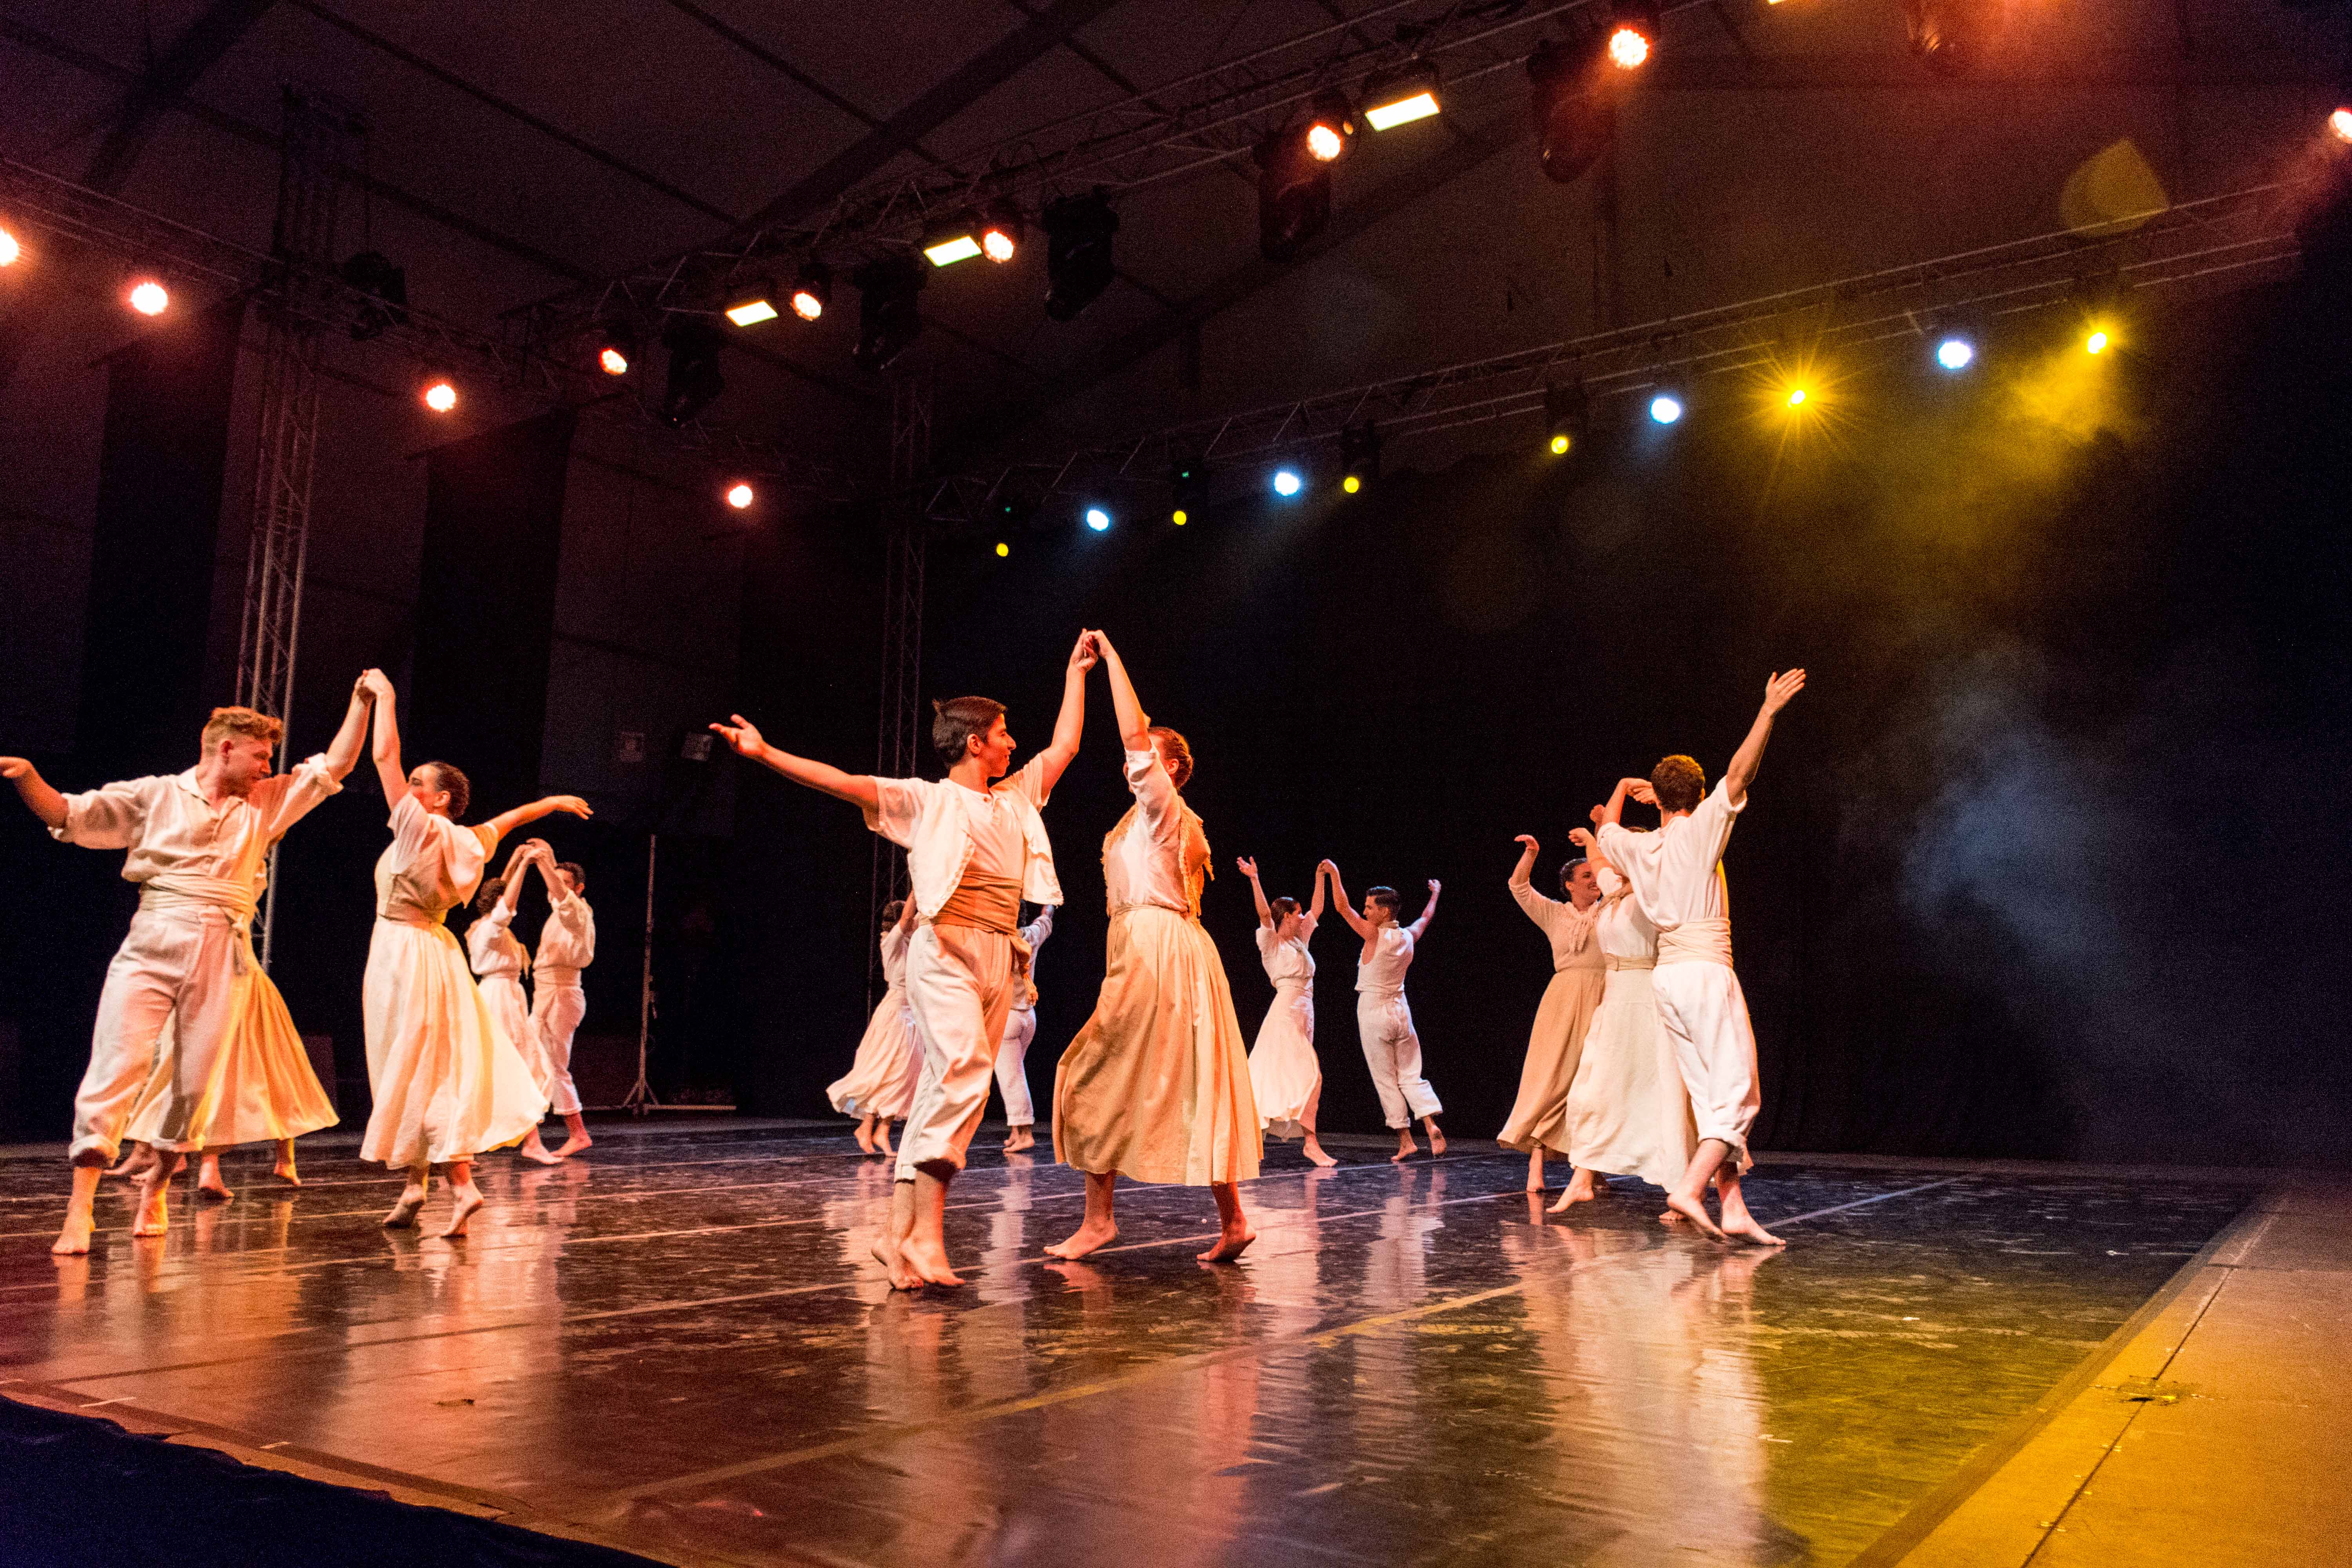  Actuació de l'Esbart Dansaire al Castell durant la Festa Major 2022. FOTO: Carmelo Jiménez